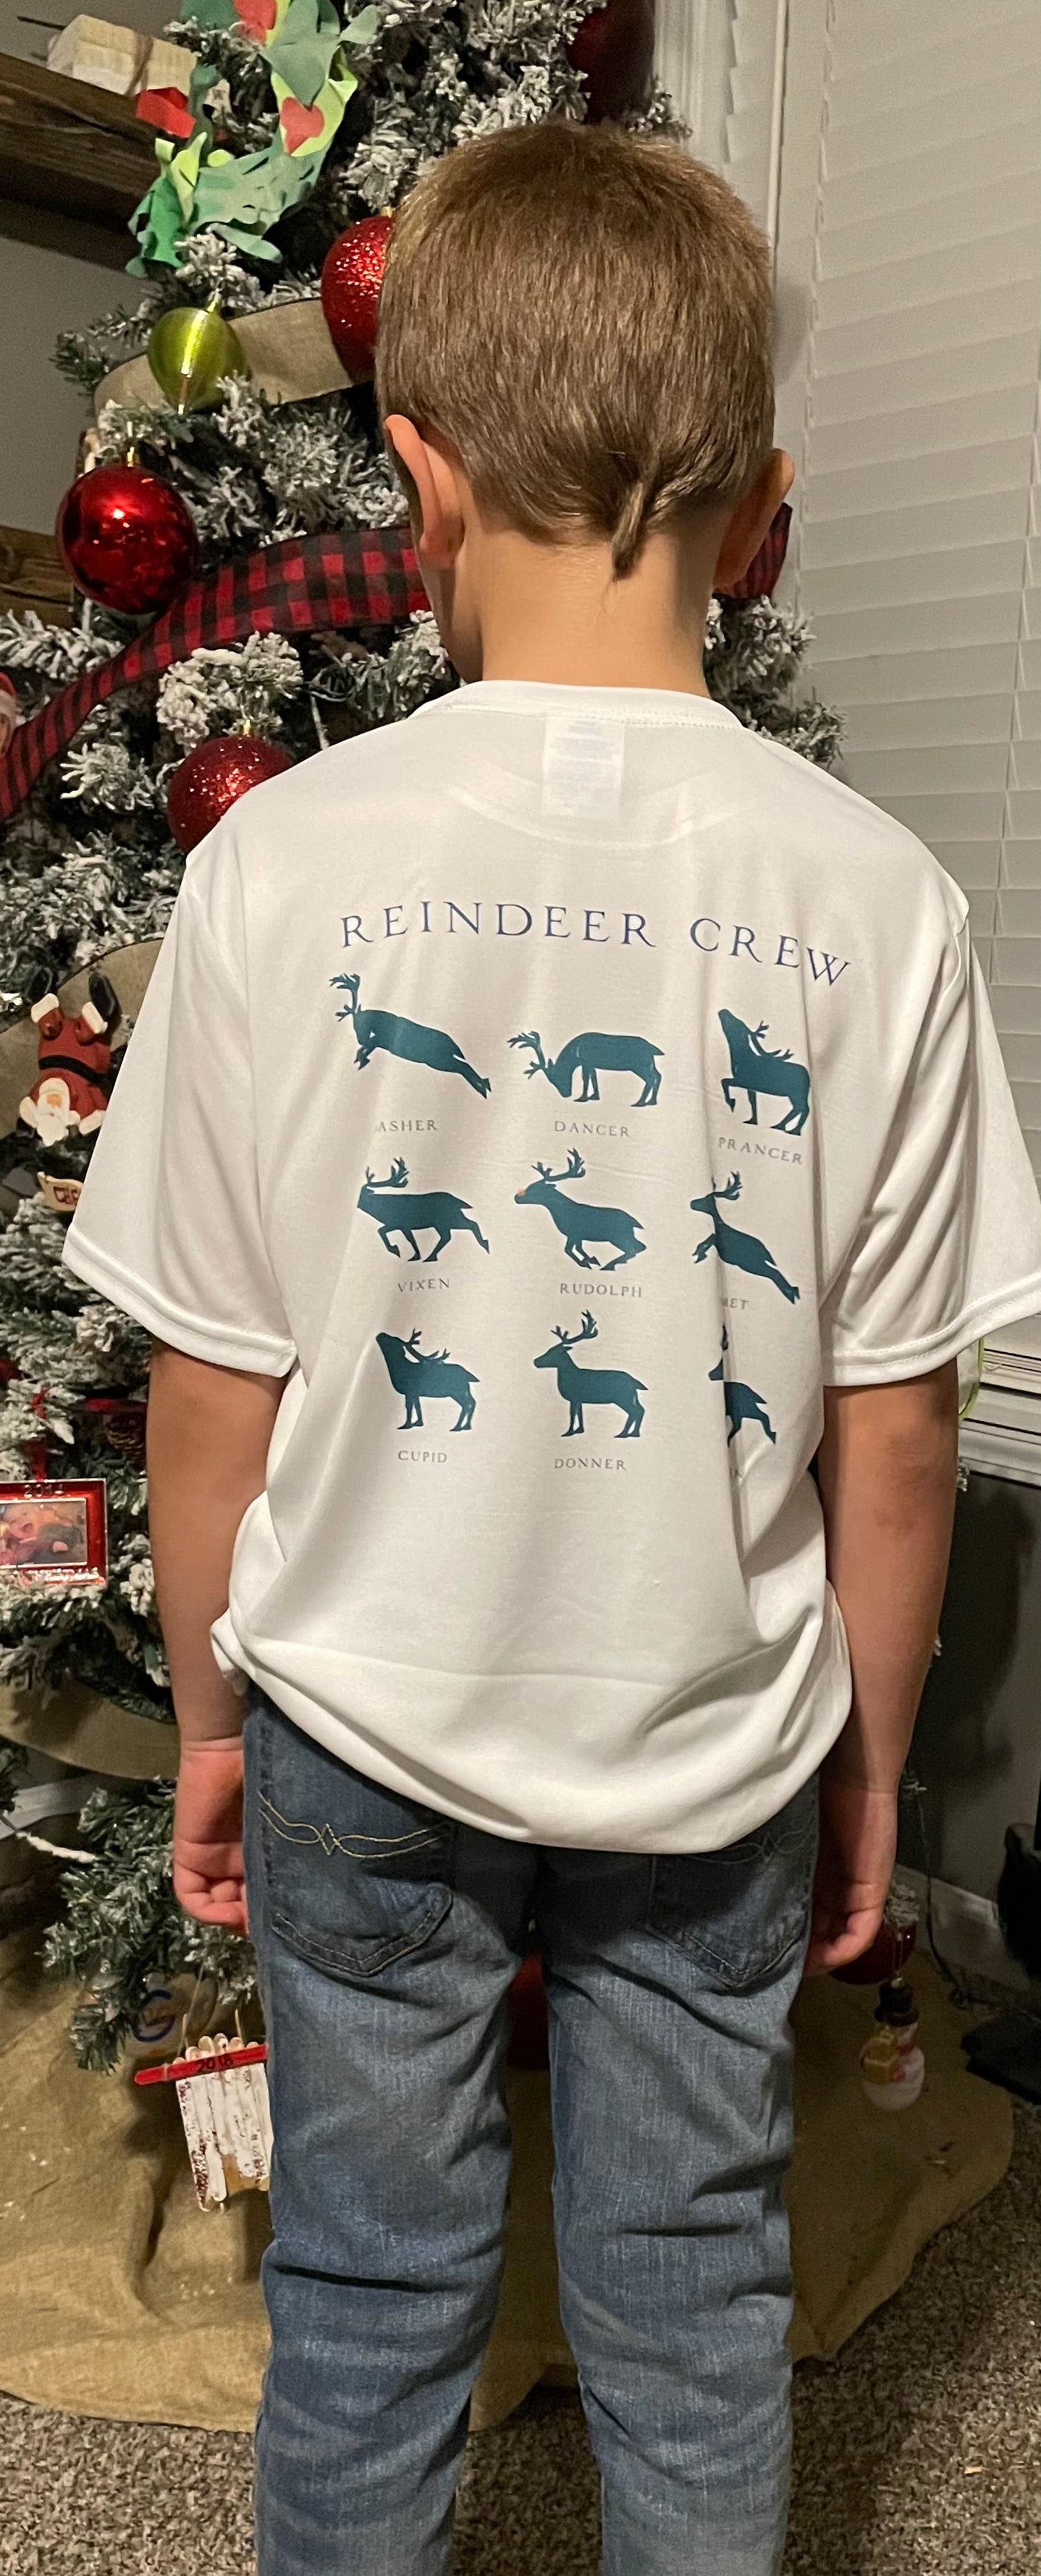 Reindeer Crew t-shirt